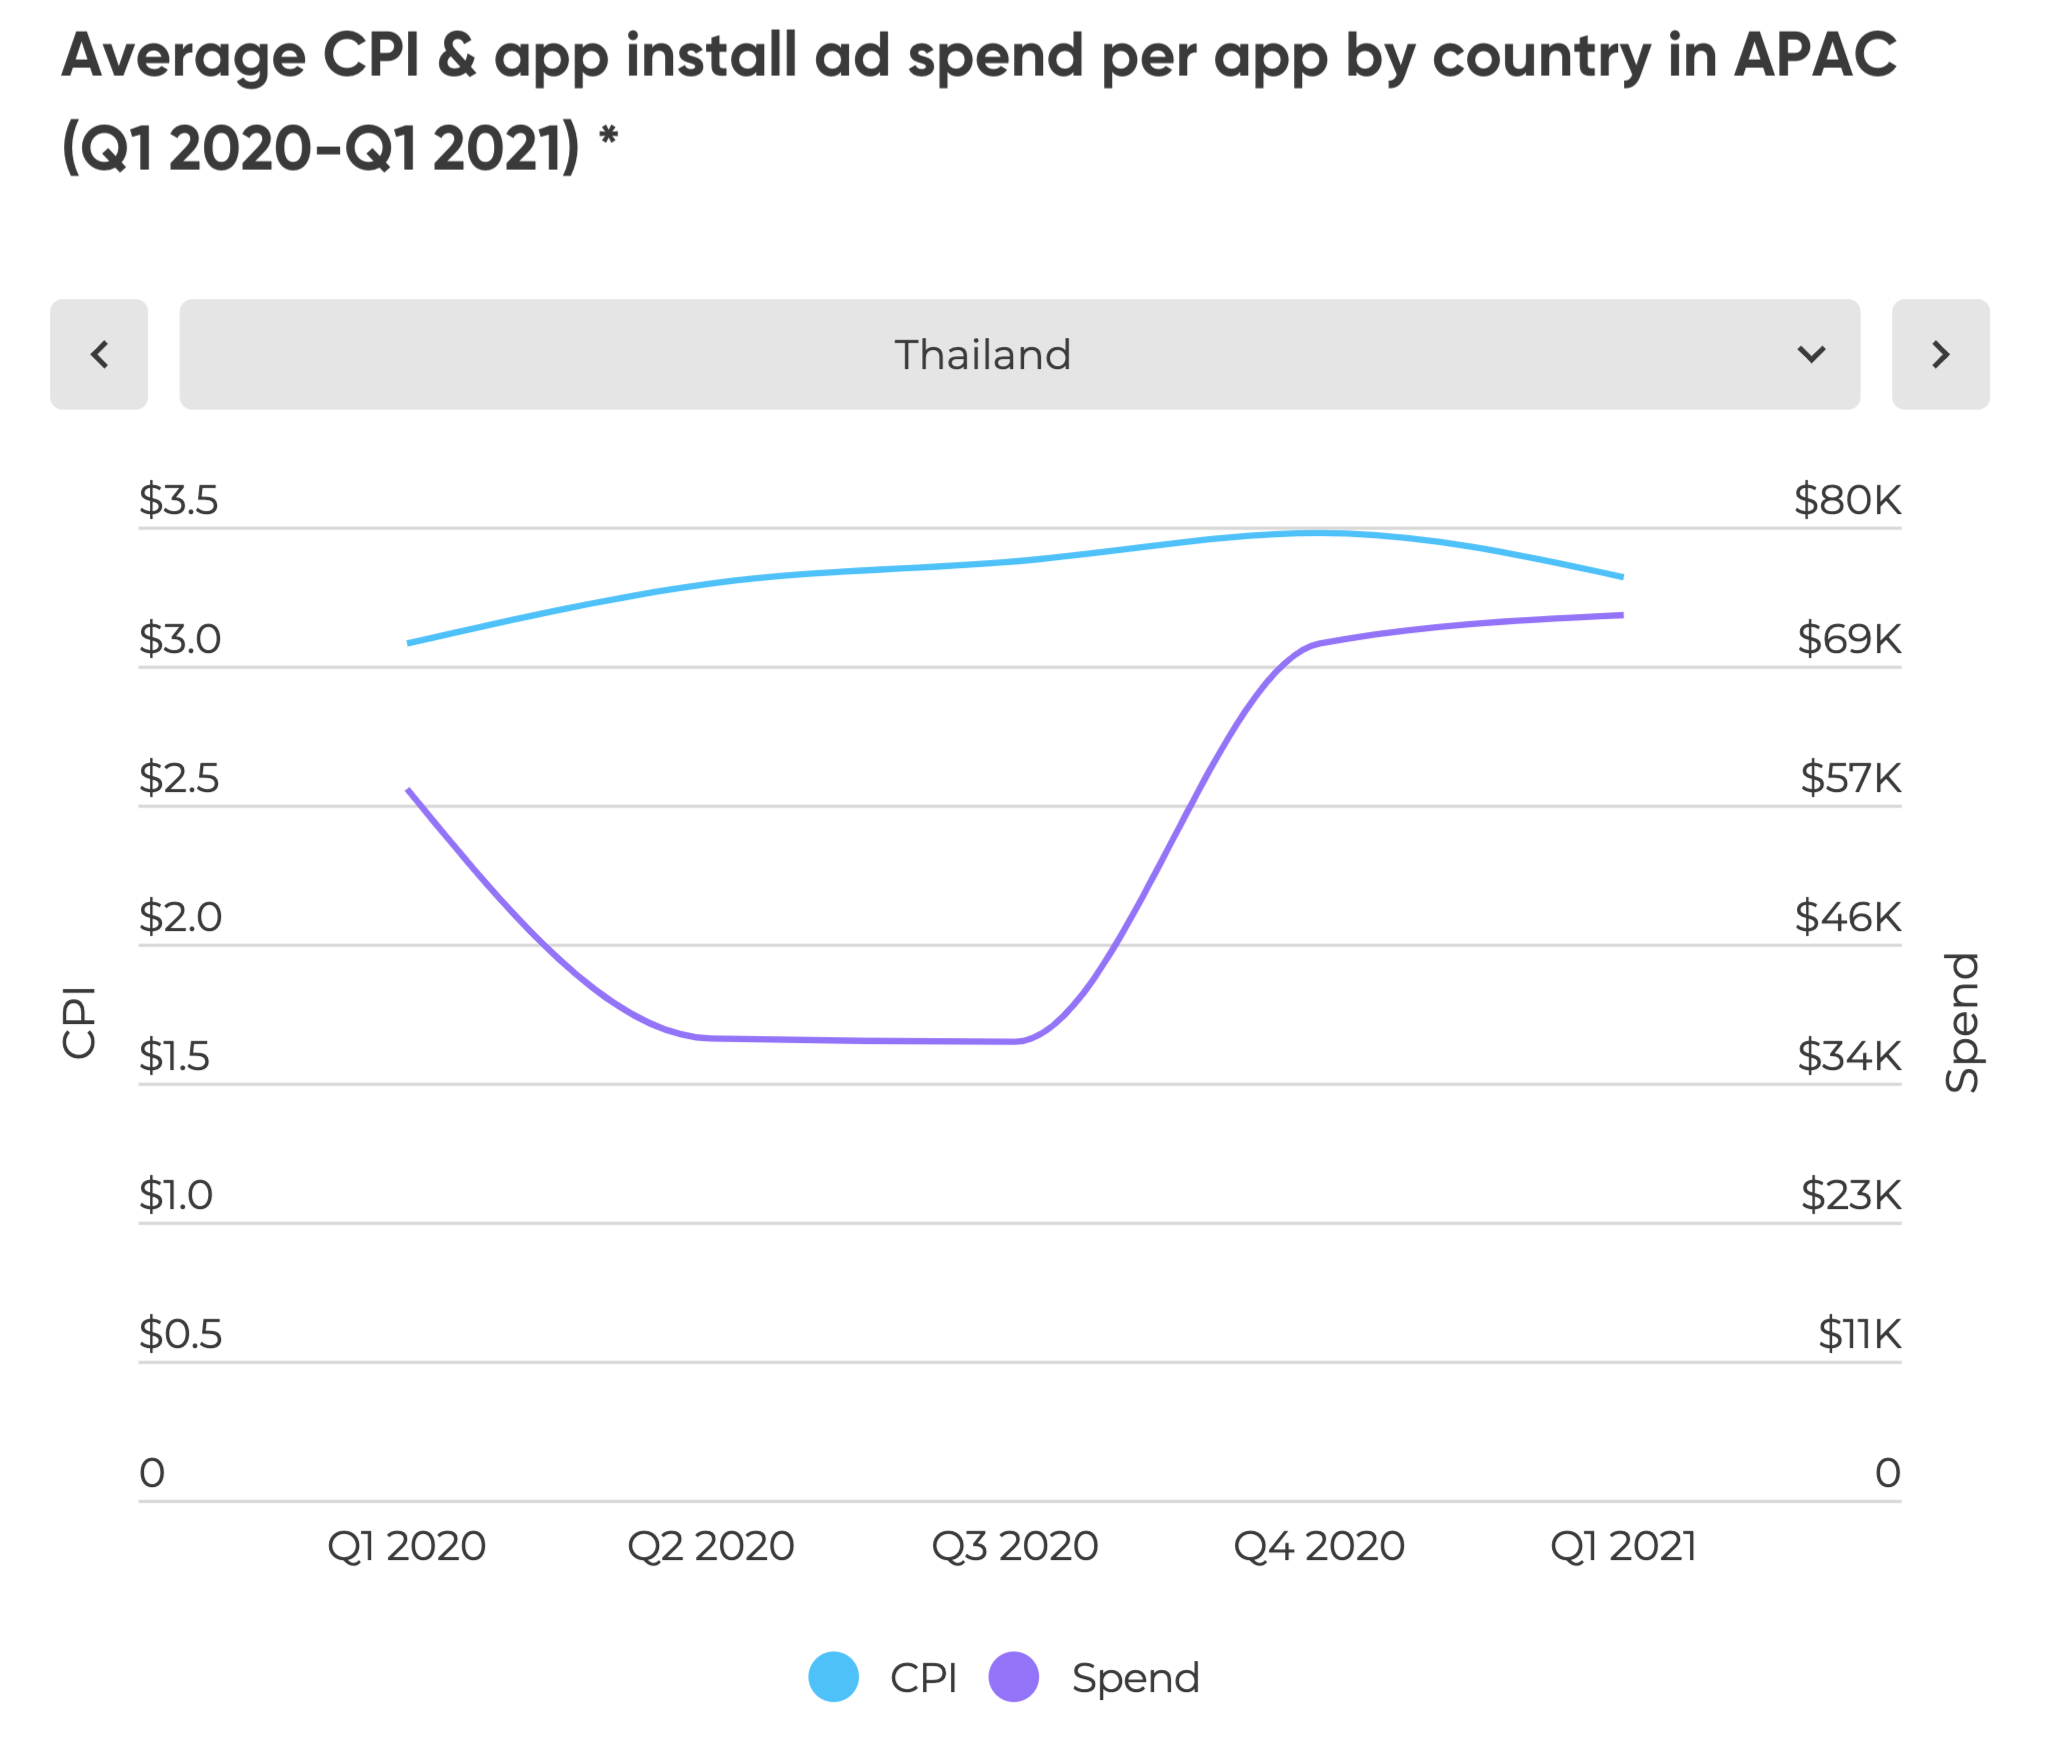 Average Cost Per Install and Ad Spend - TH